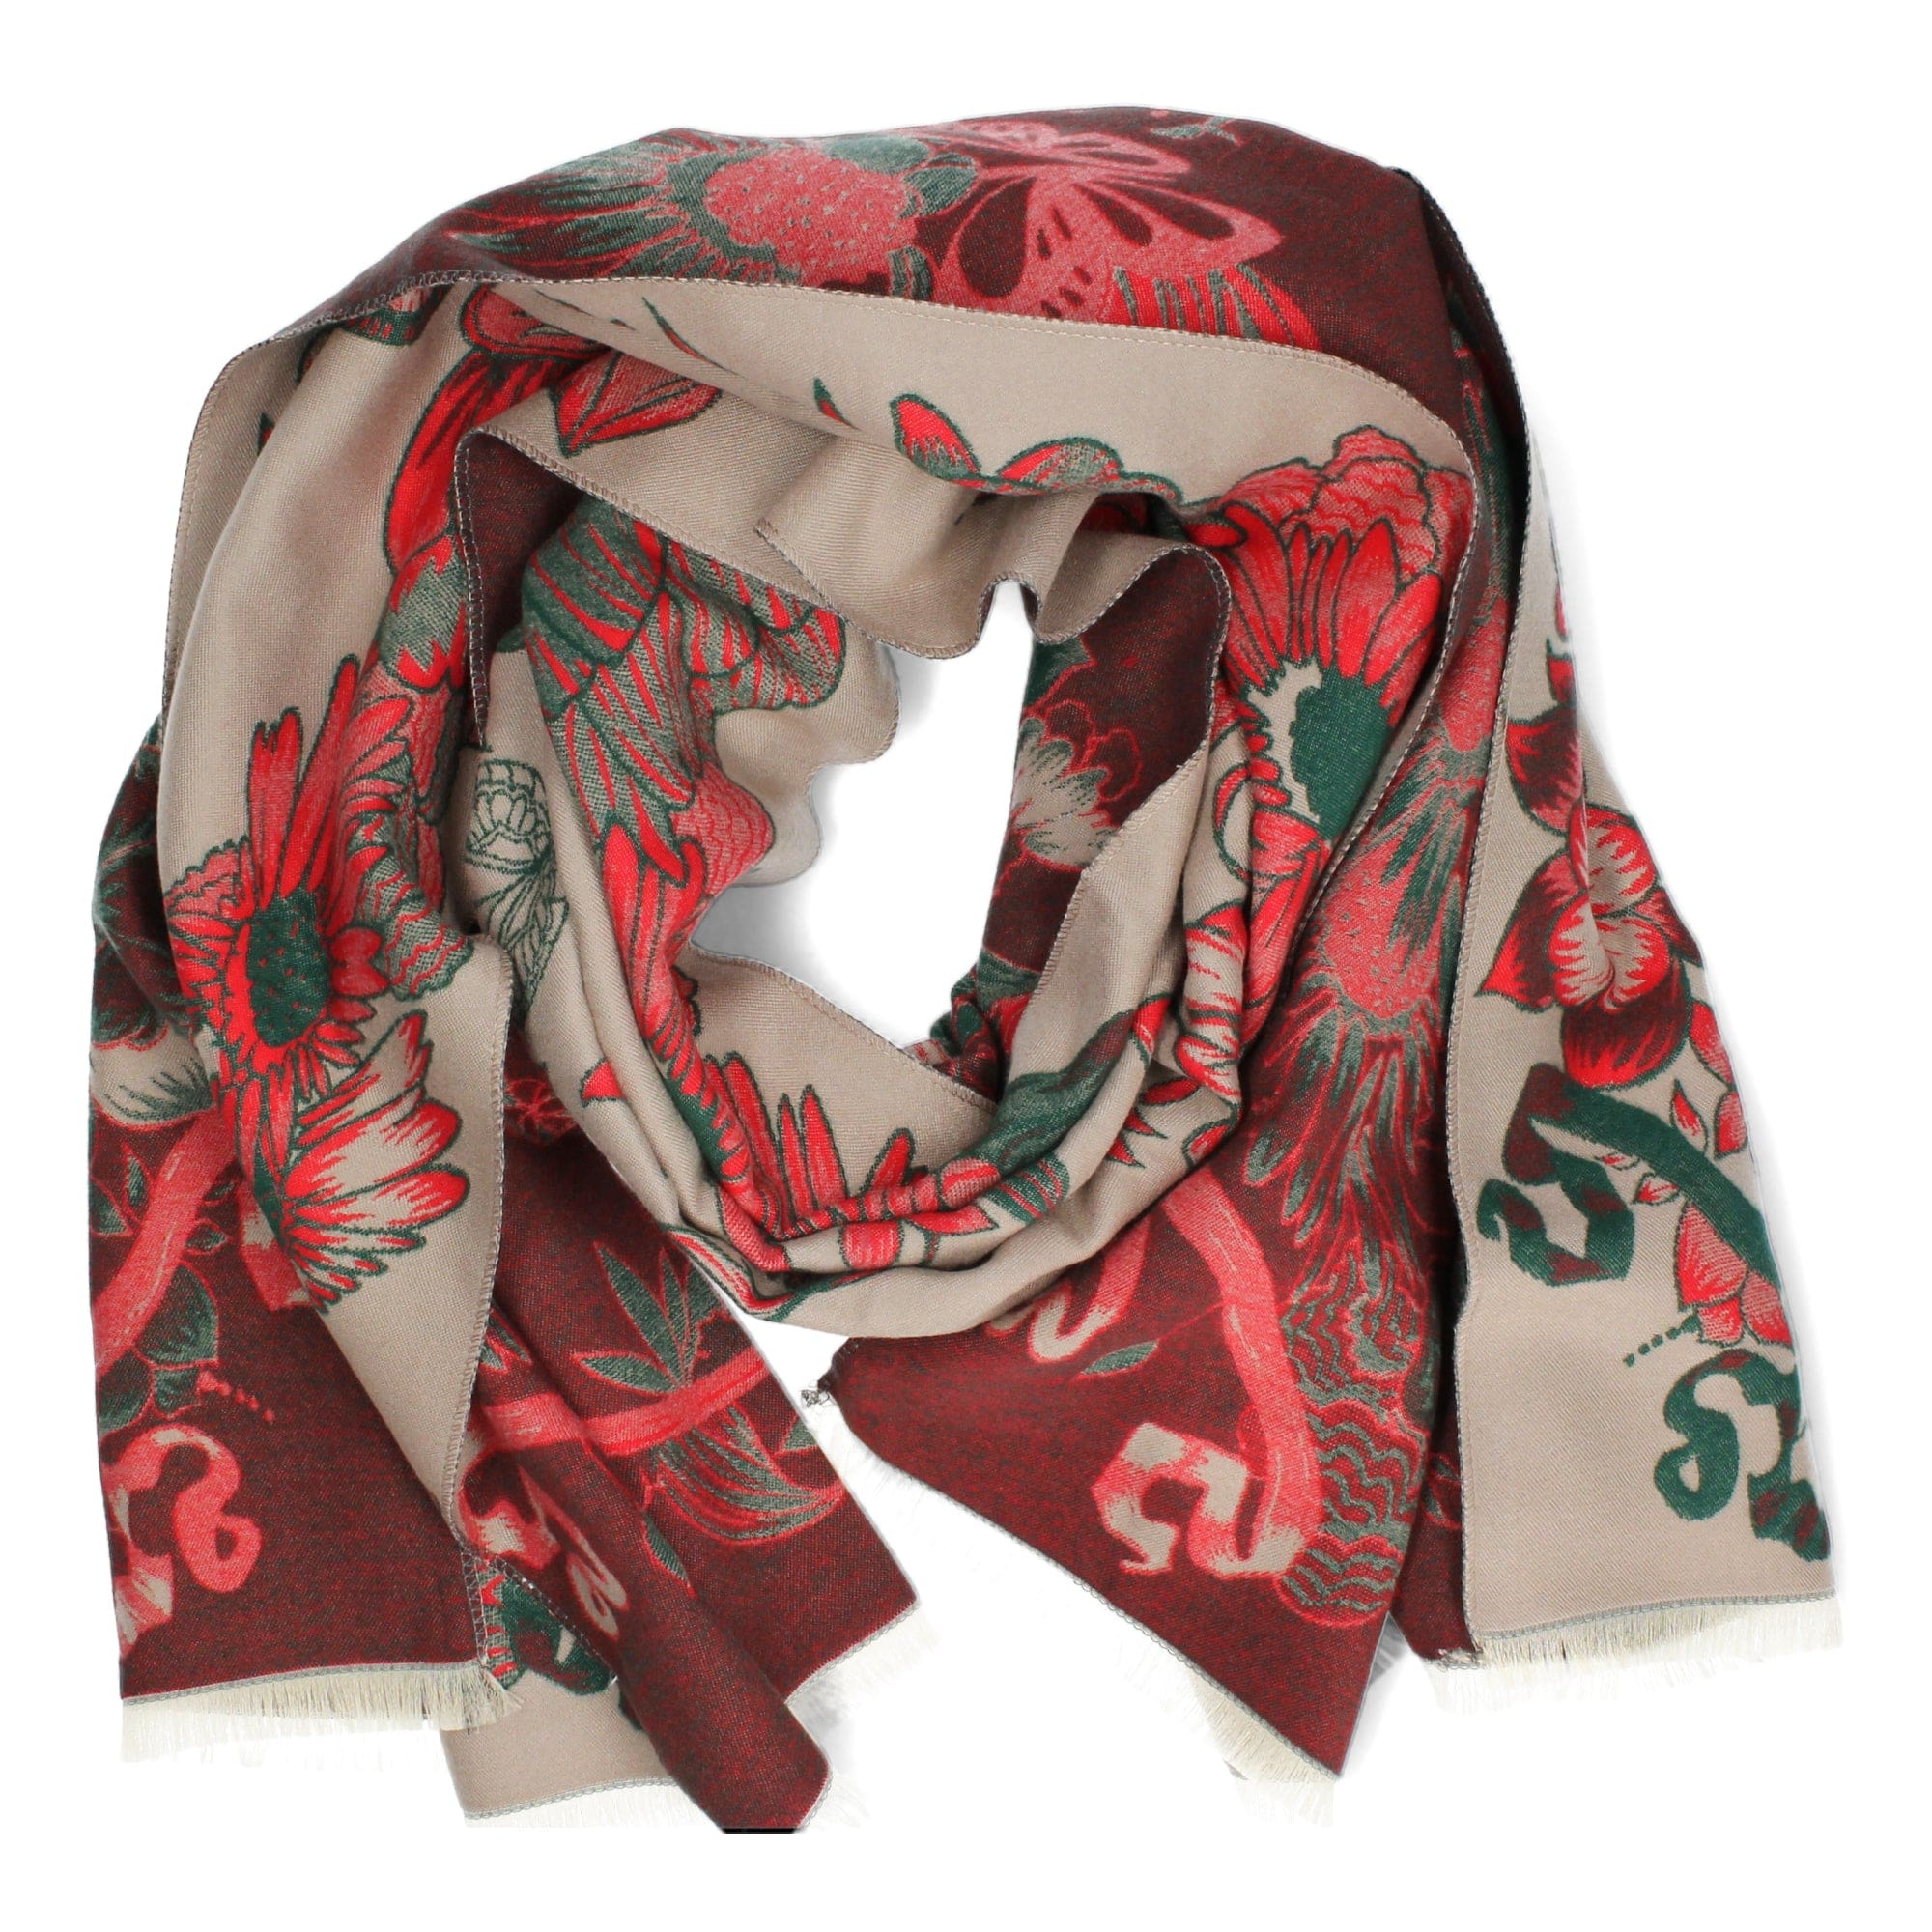 Tinkerbell scarf - shawl